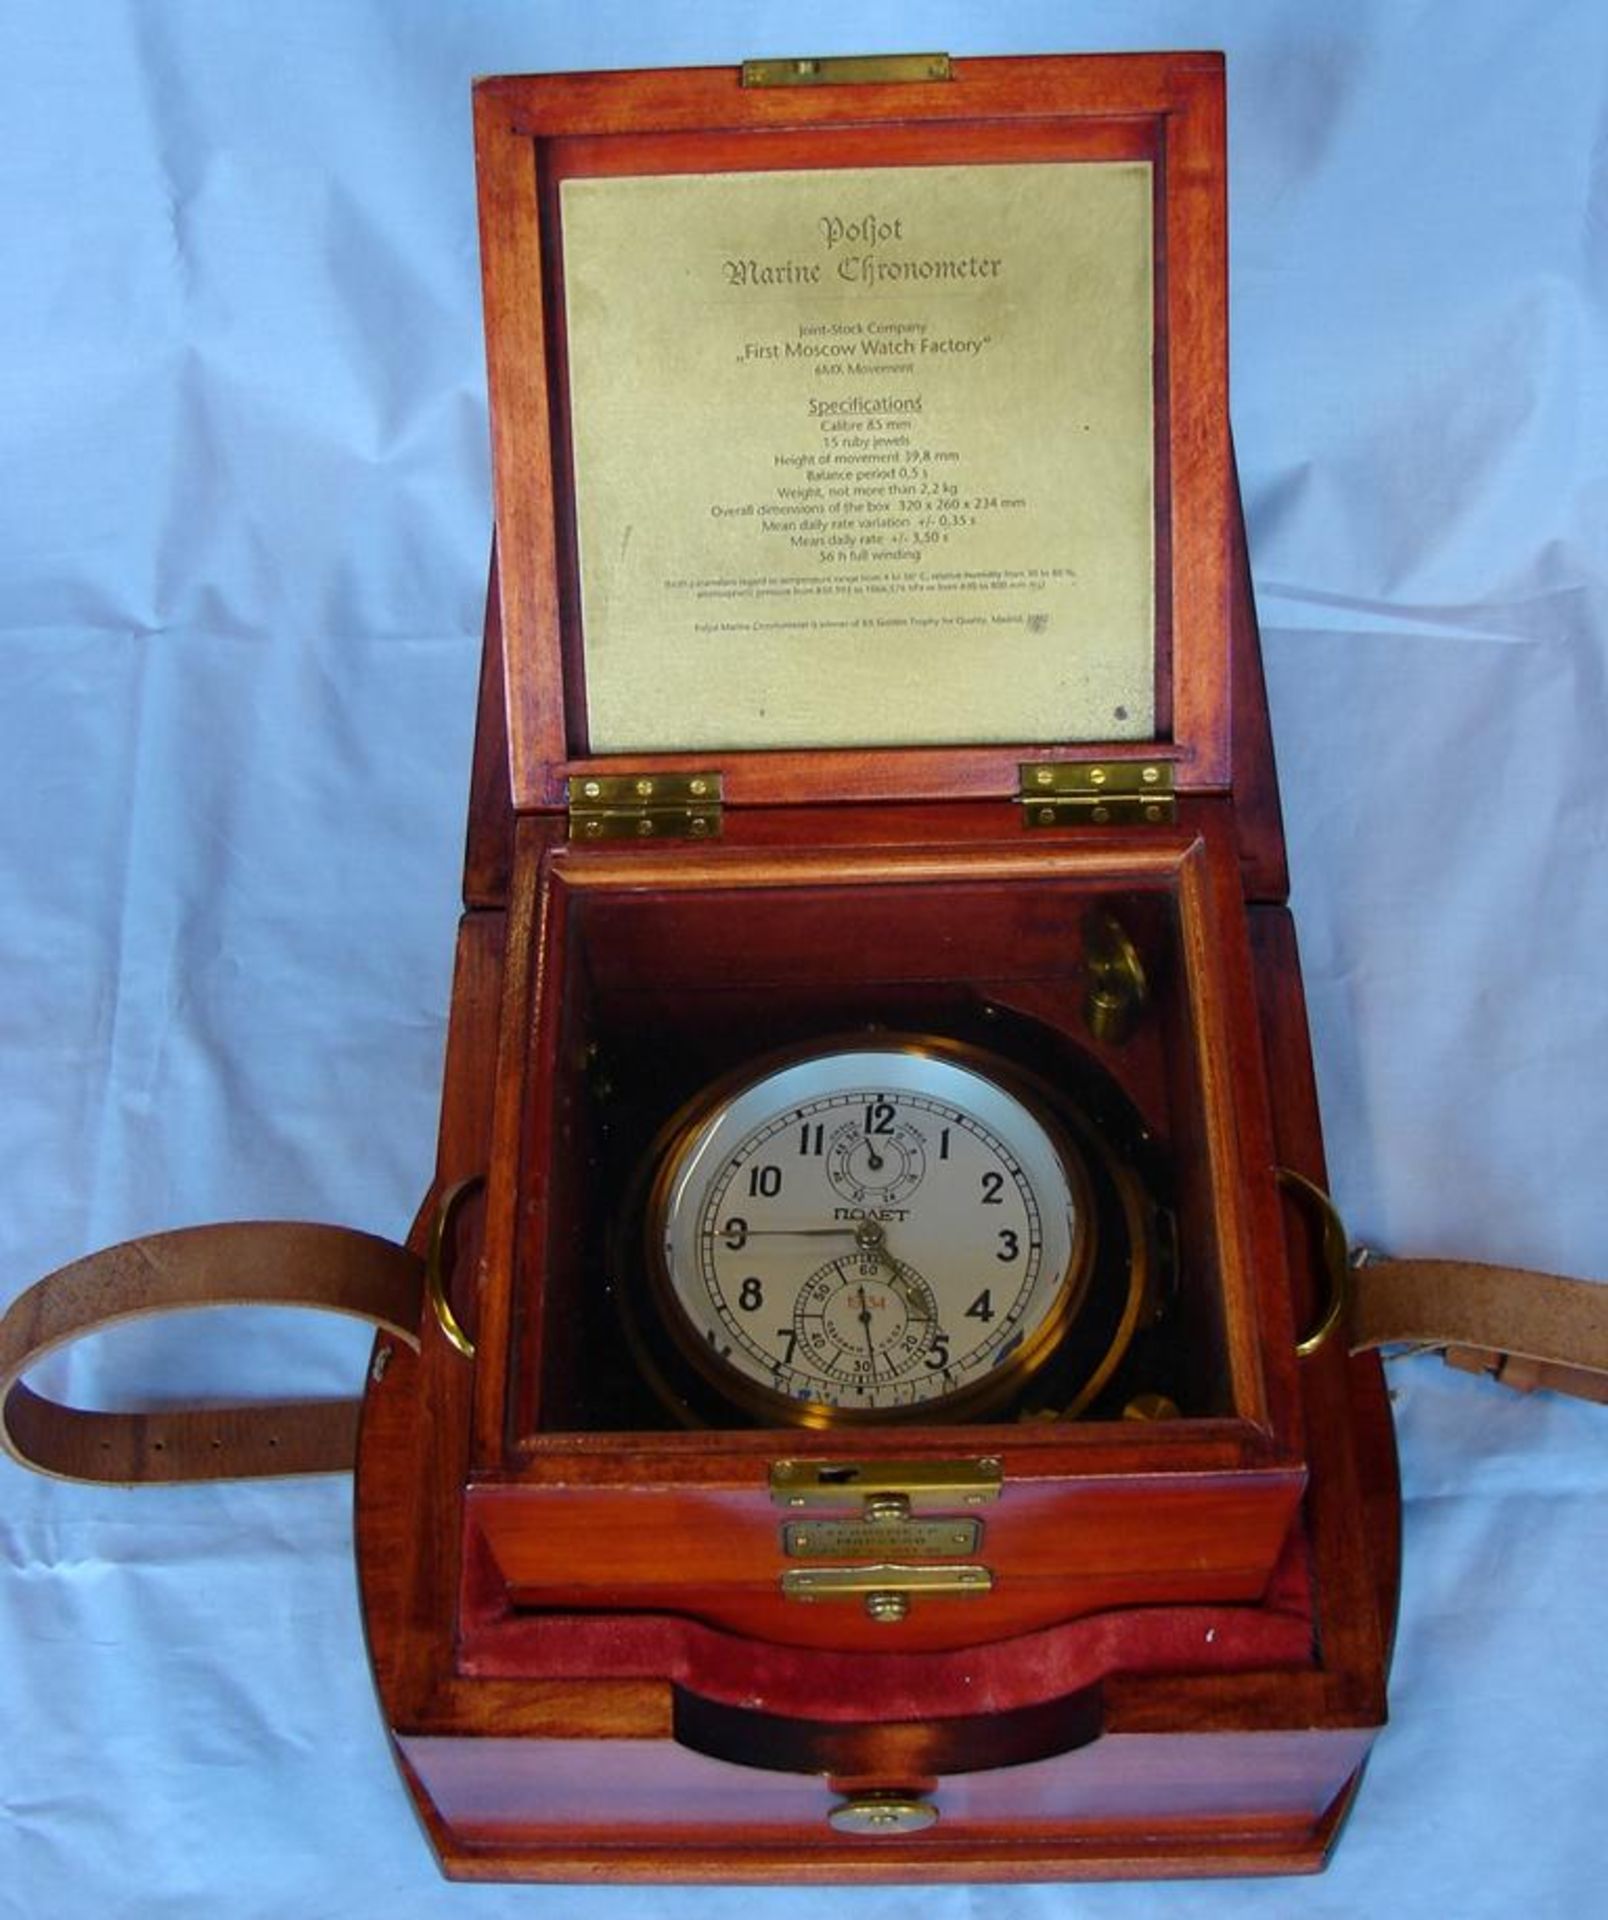 Marine Chronometer, Poljot, First Moscow Wath Factory, im Holzkasten, Caliber 85mm